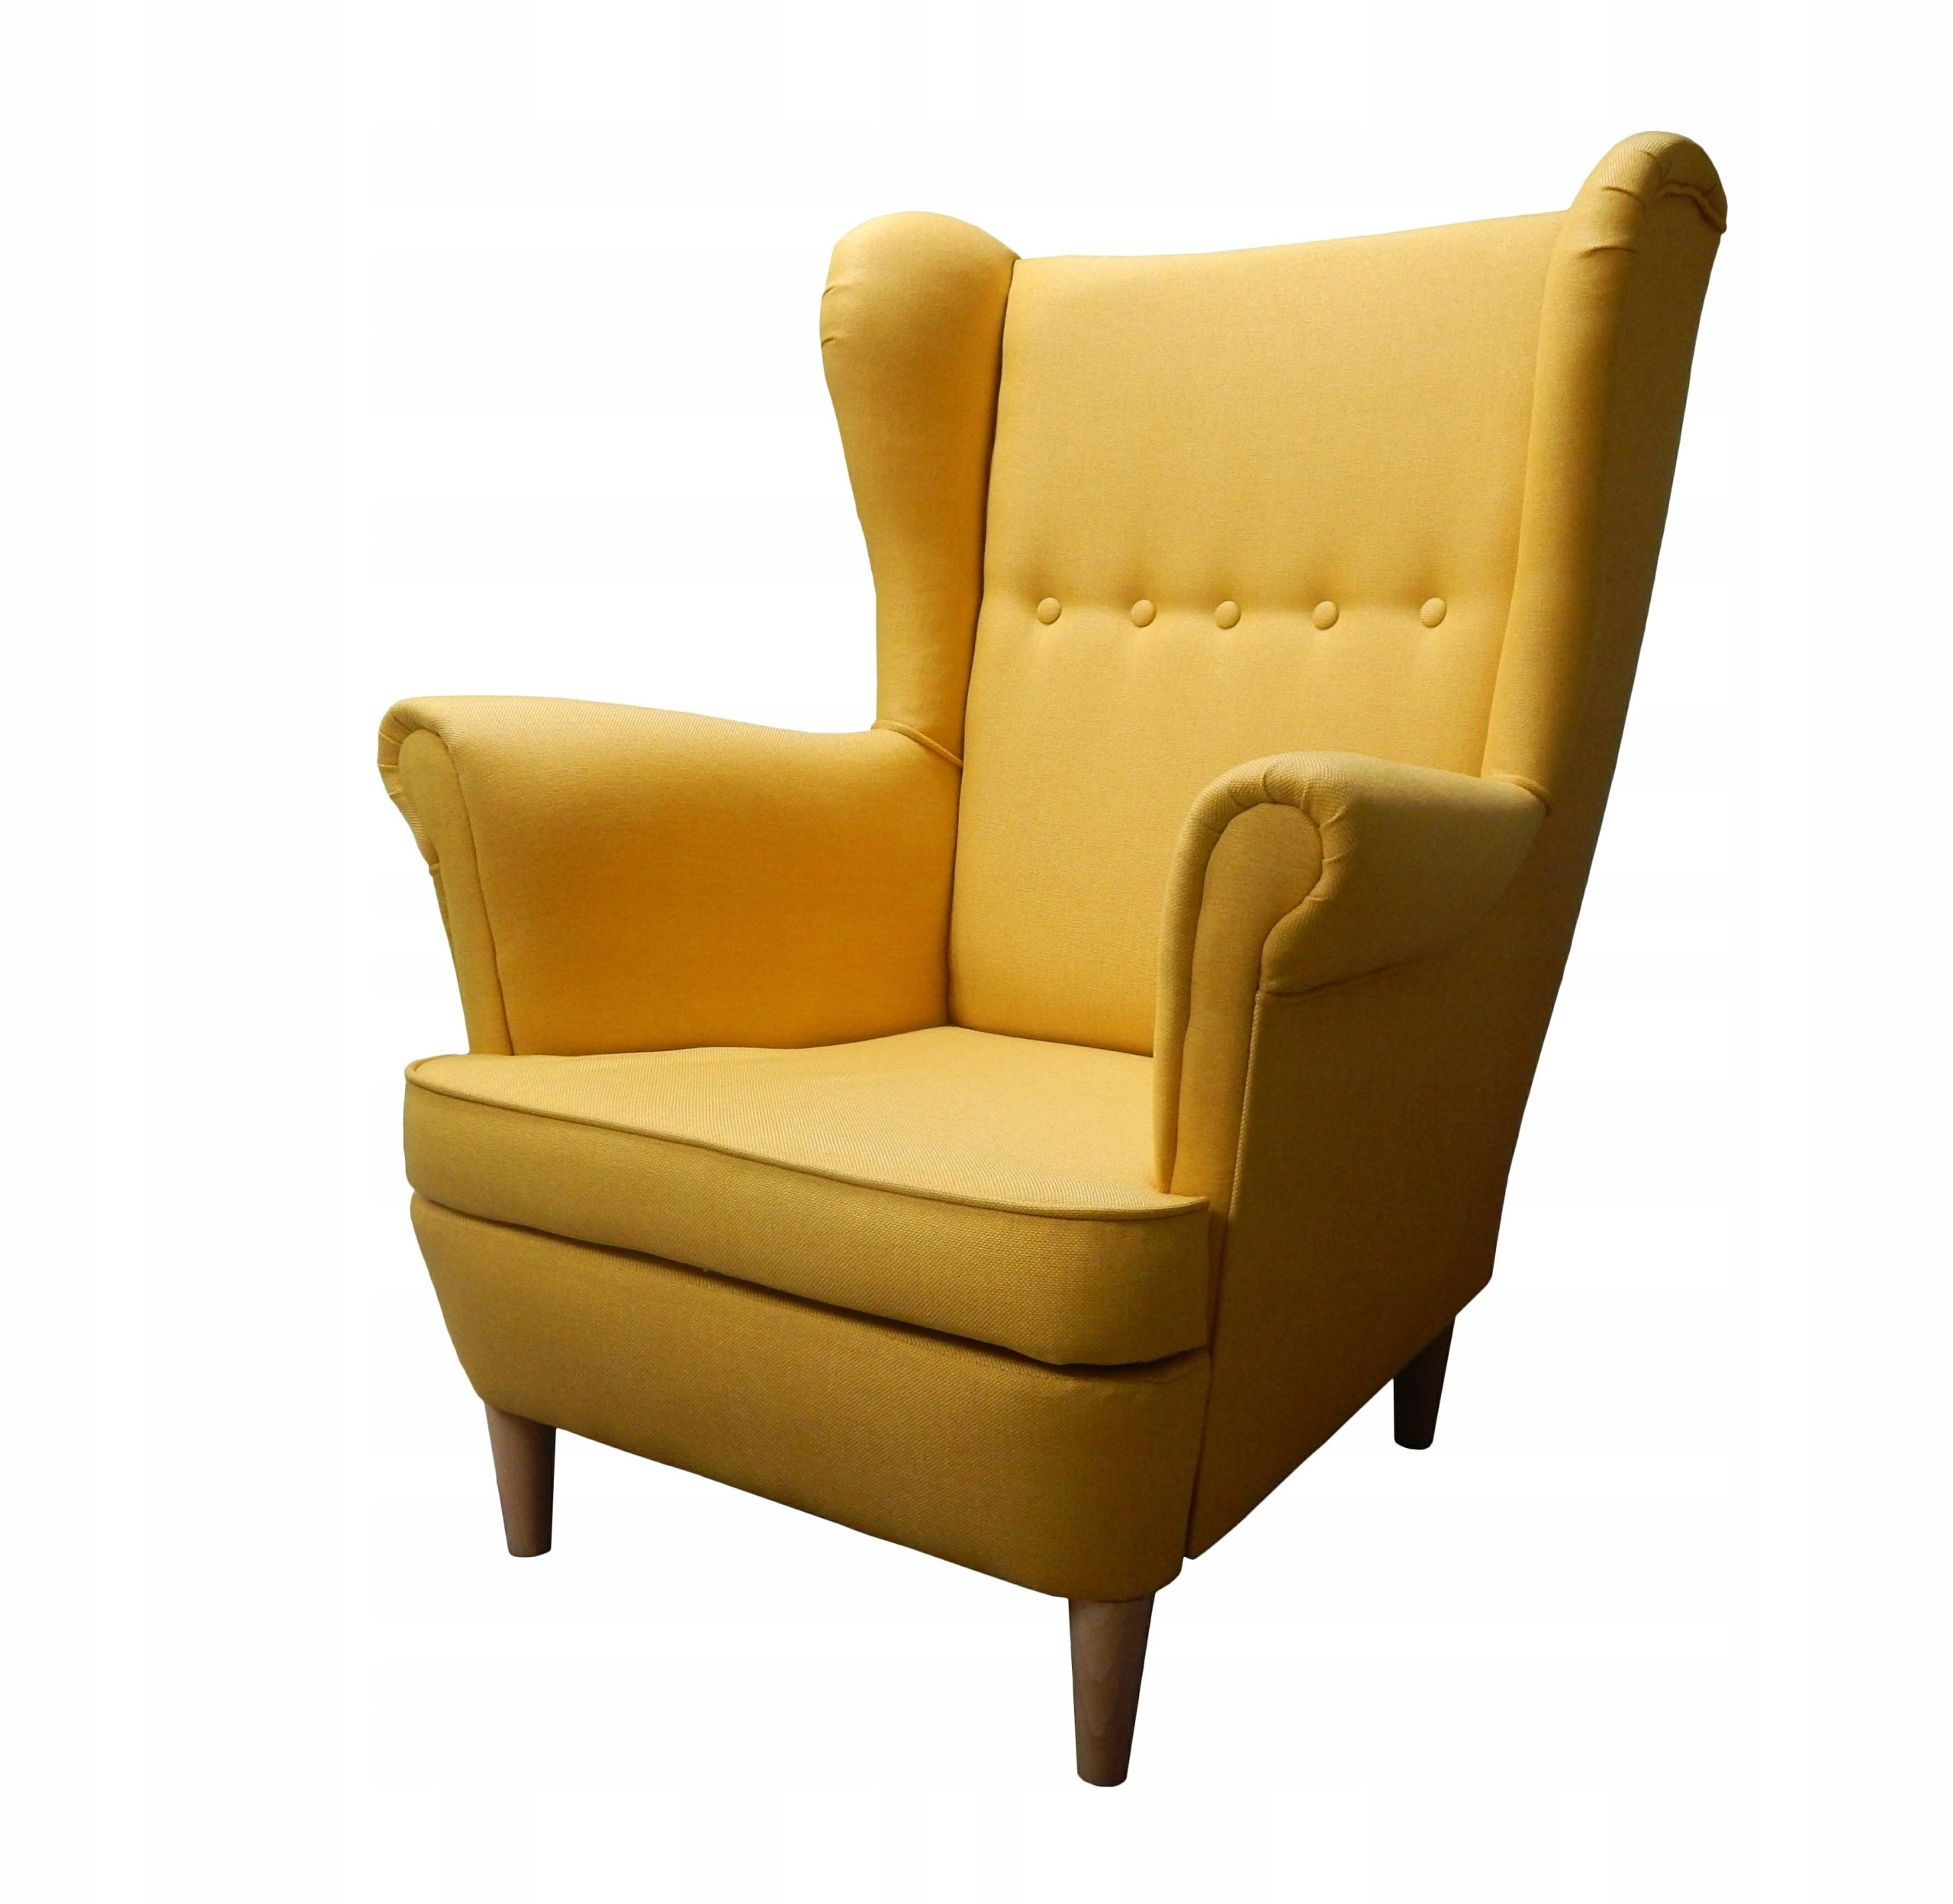 Горчичное кресло. Кресло горчичного цвета. Кркслогорчичного цвета. Кресло цвета горчица. Кресло желтого цвета.